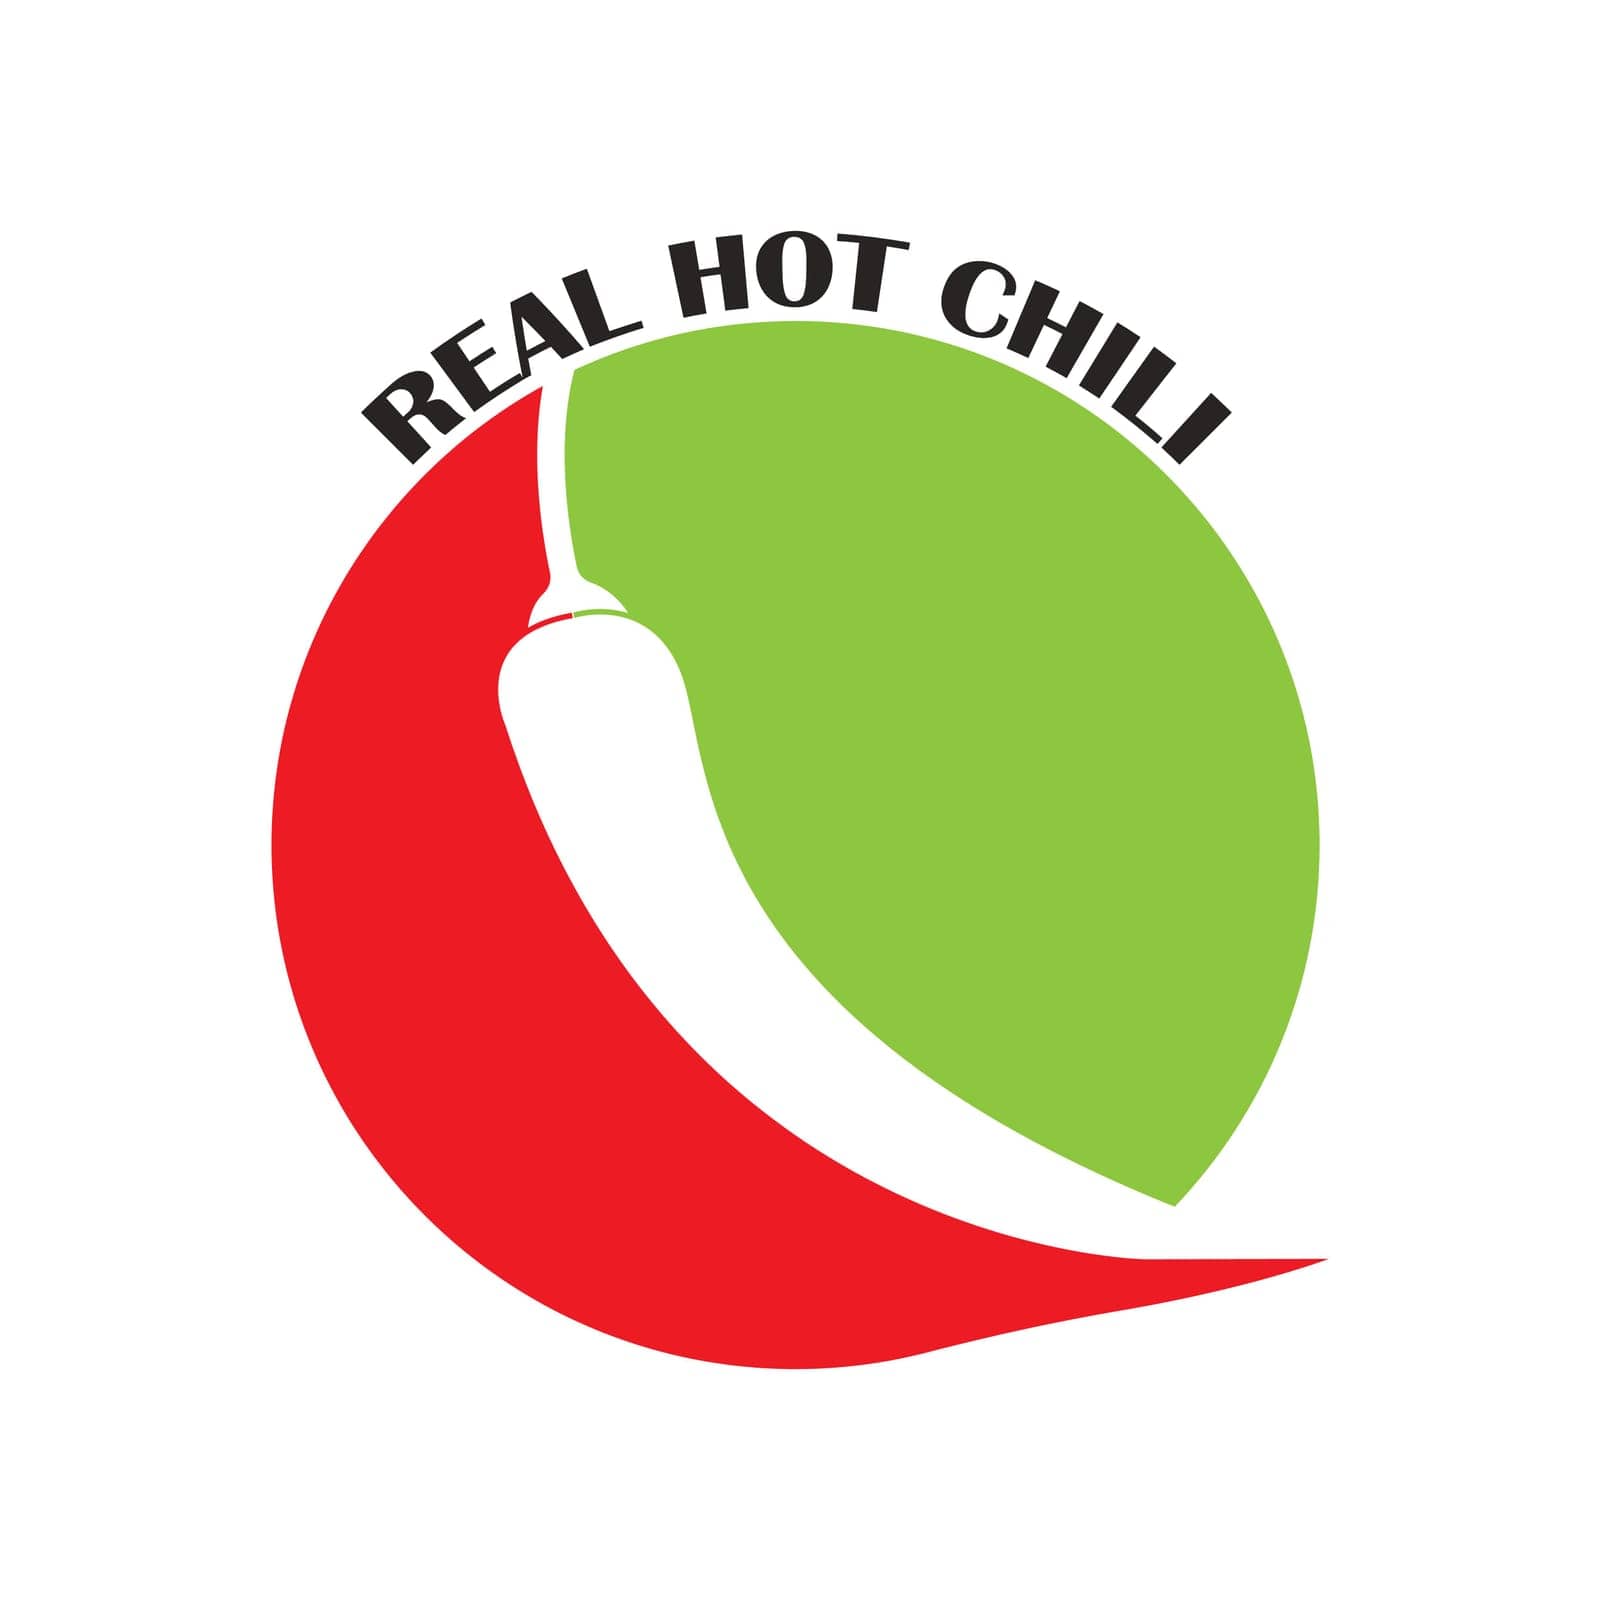 chili logo by rnking